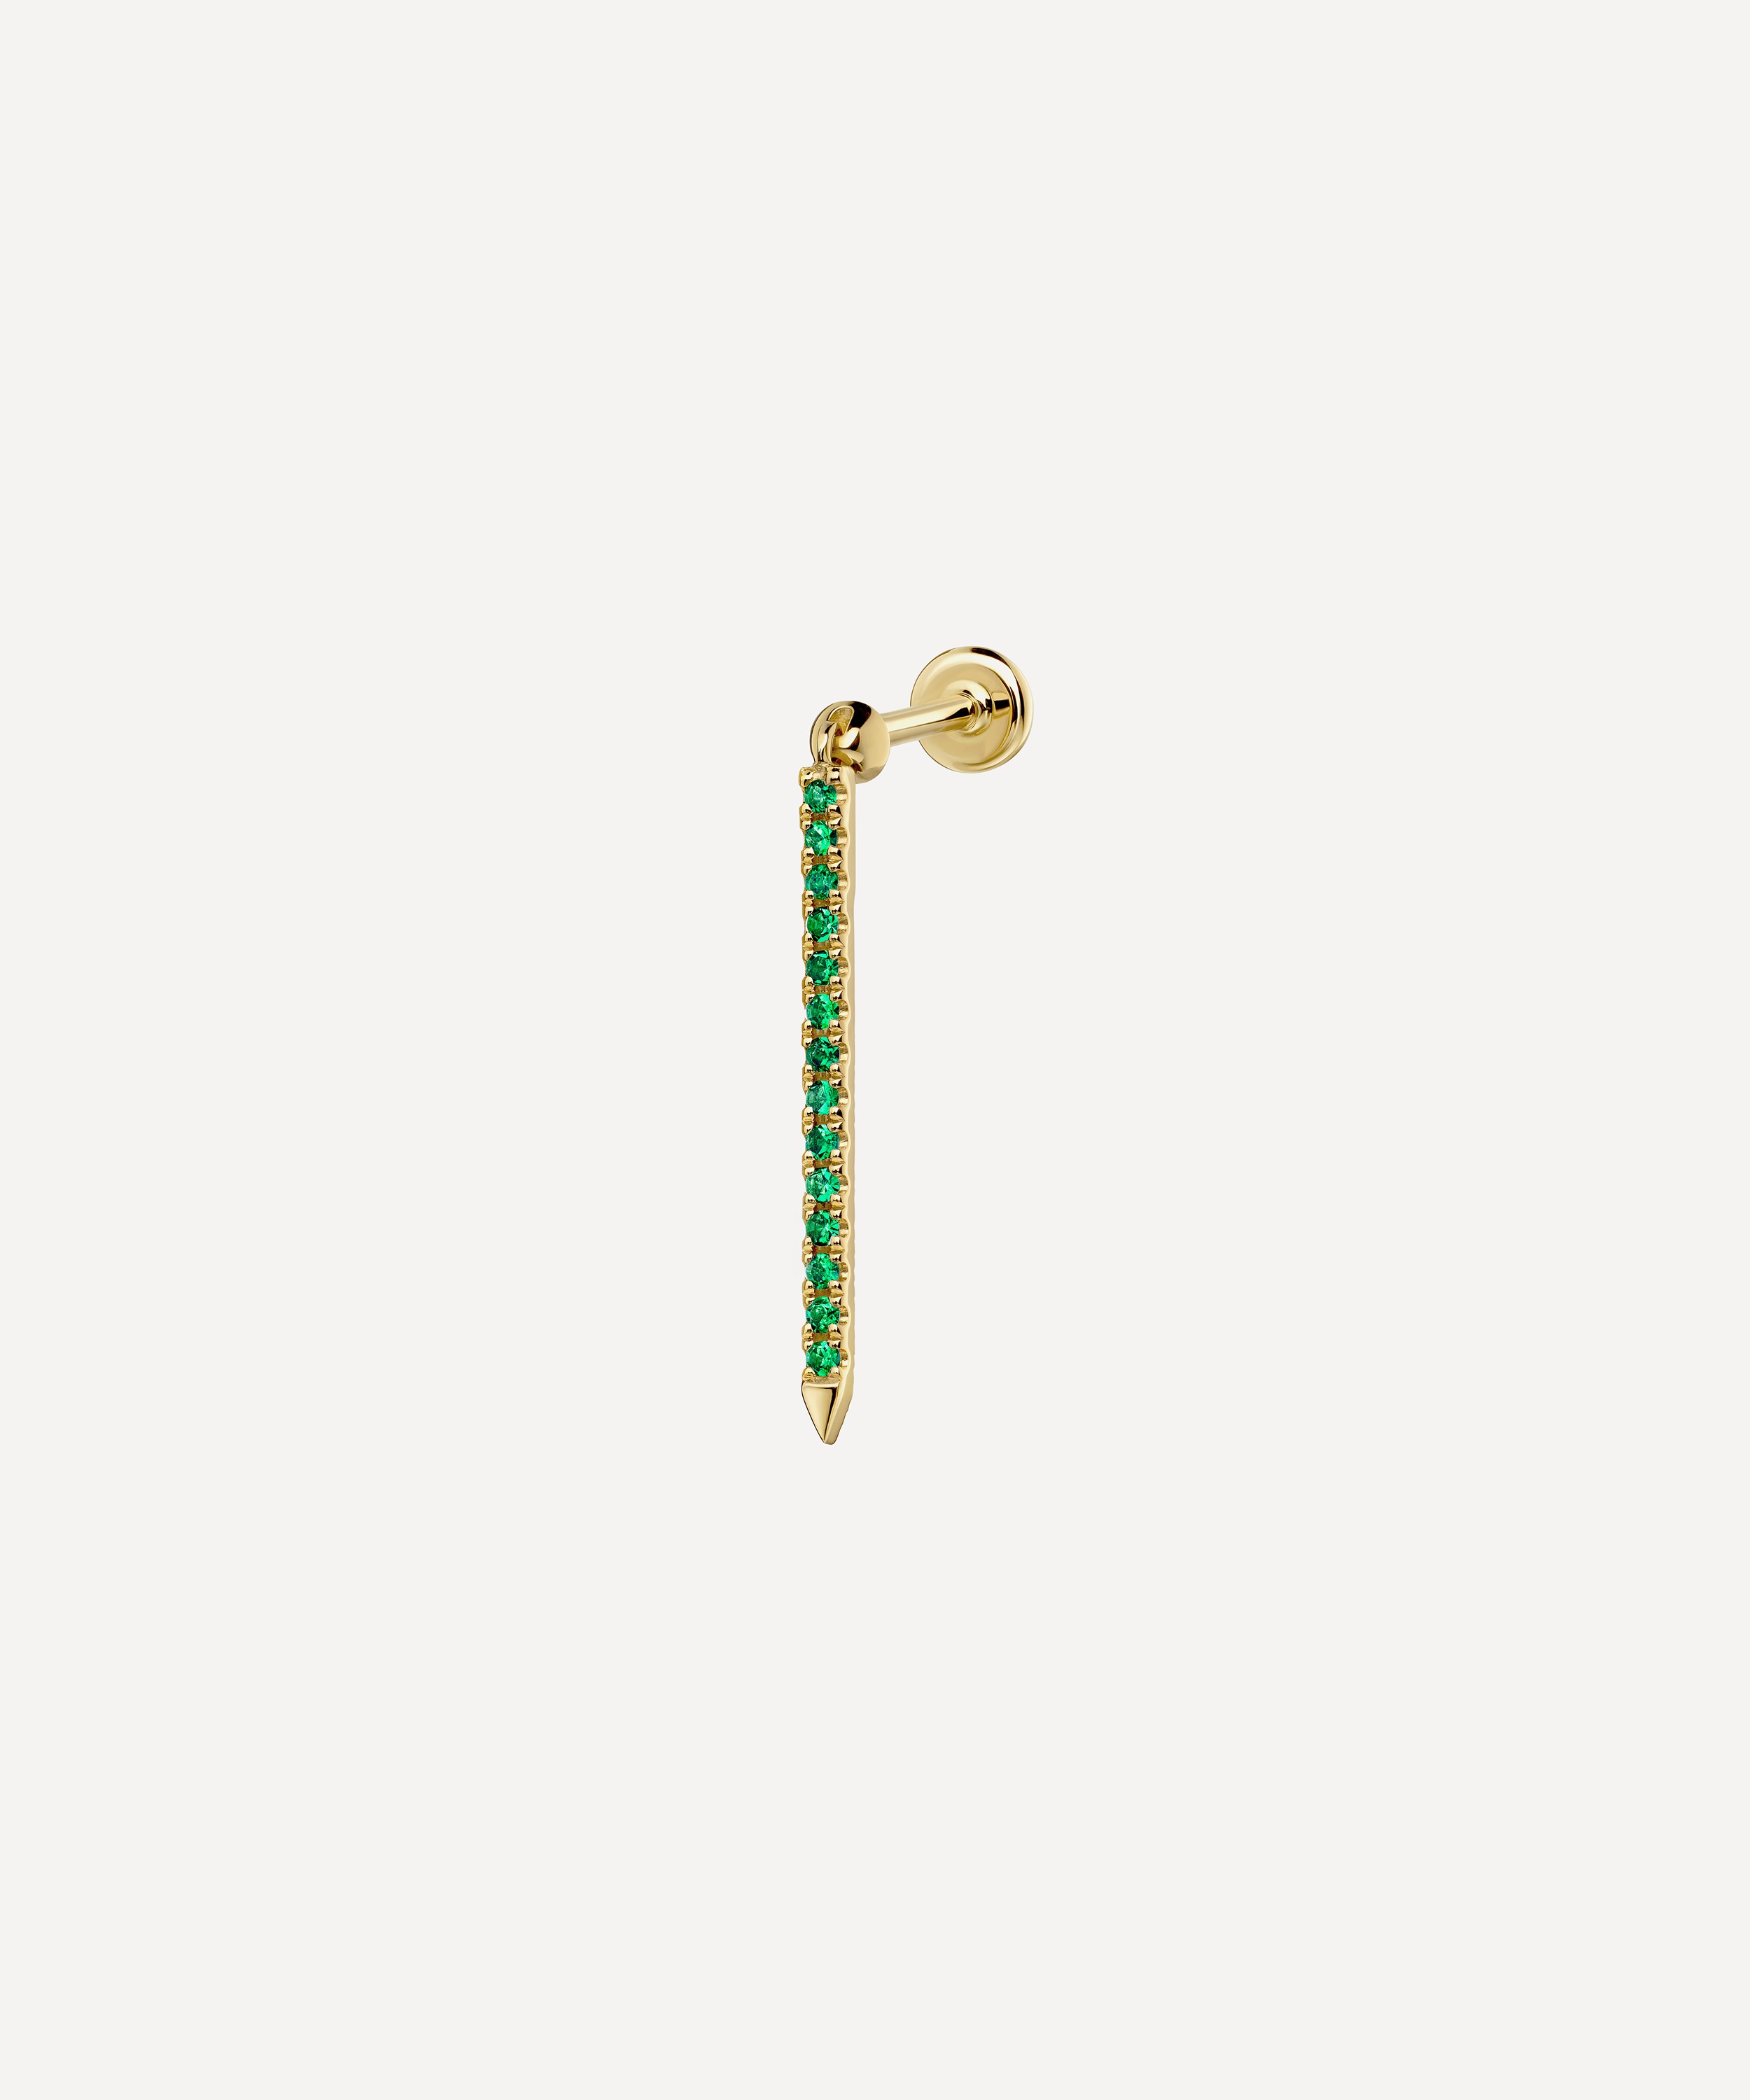 Maria Tash - 18ct 18mm Emerald Eternity Bar Charm Threaded Stud Earring